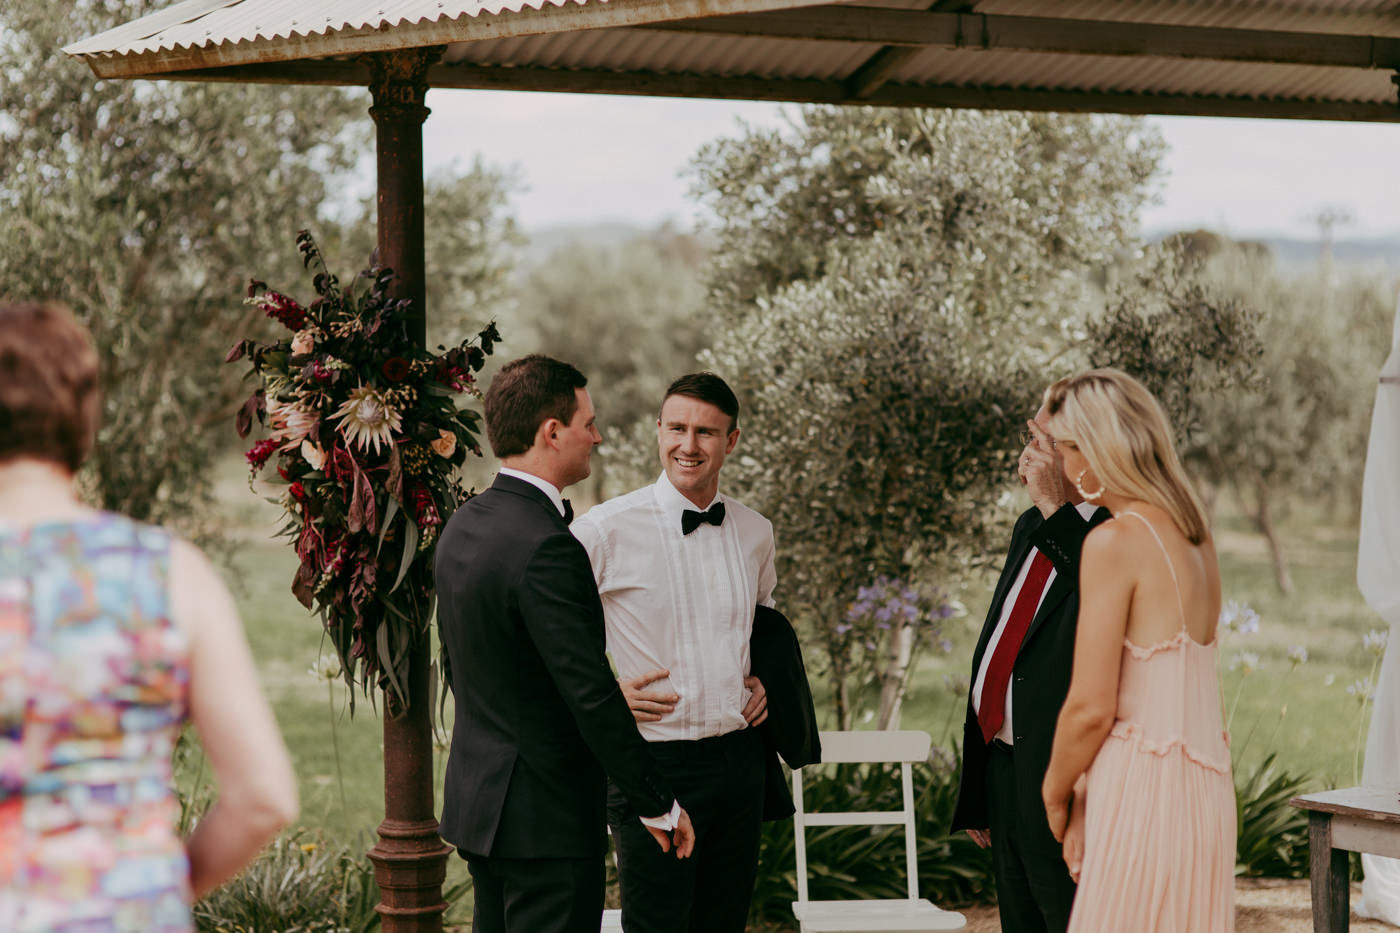 Anthony & Eliet - Wagga Wagga Wedding - Country NSW - Samantha Heather Photography-94.jpg